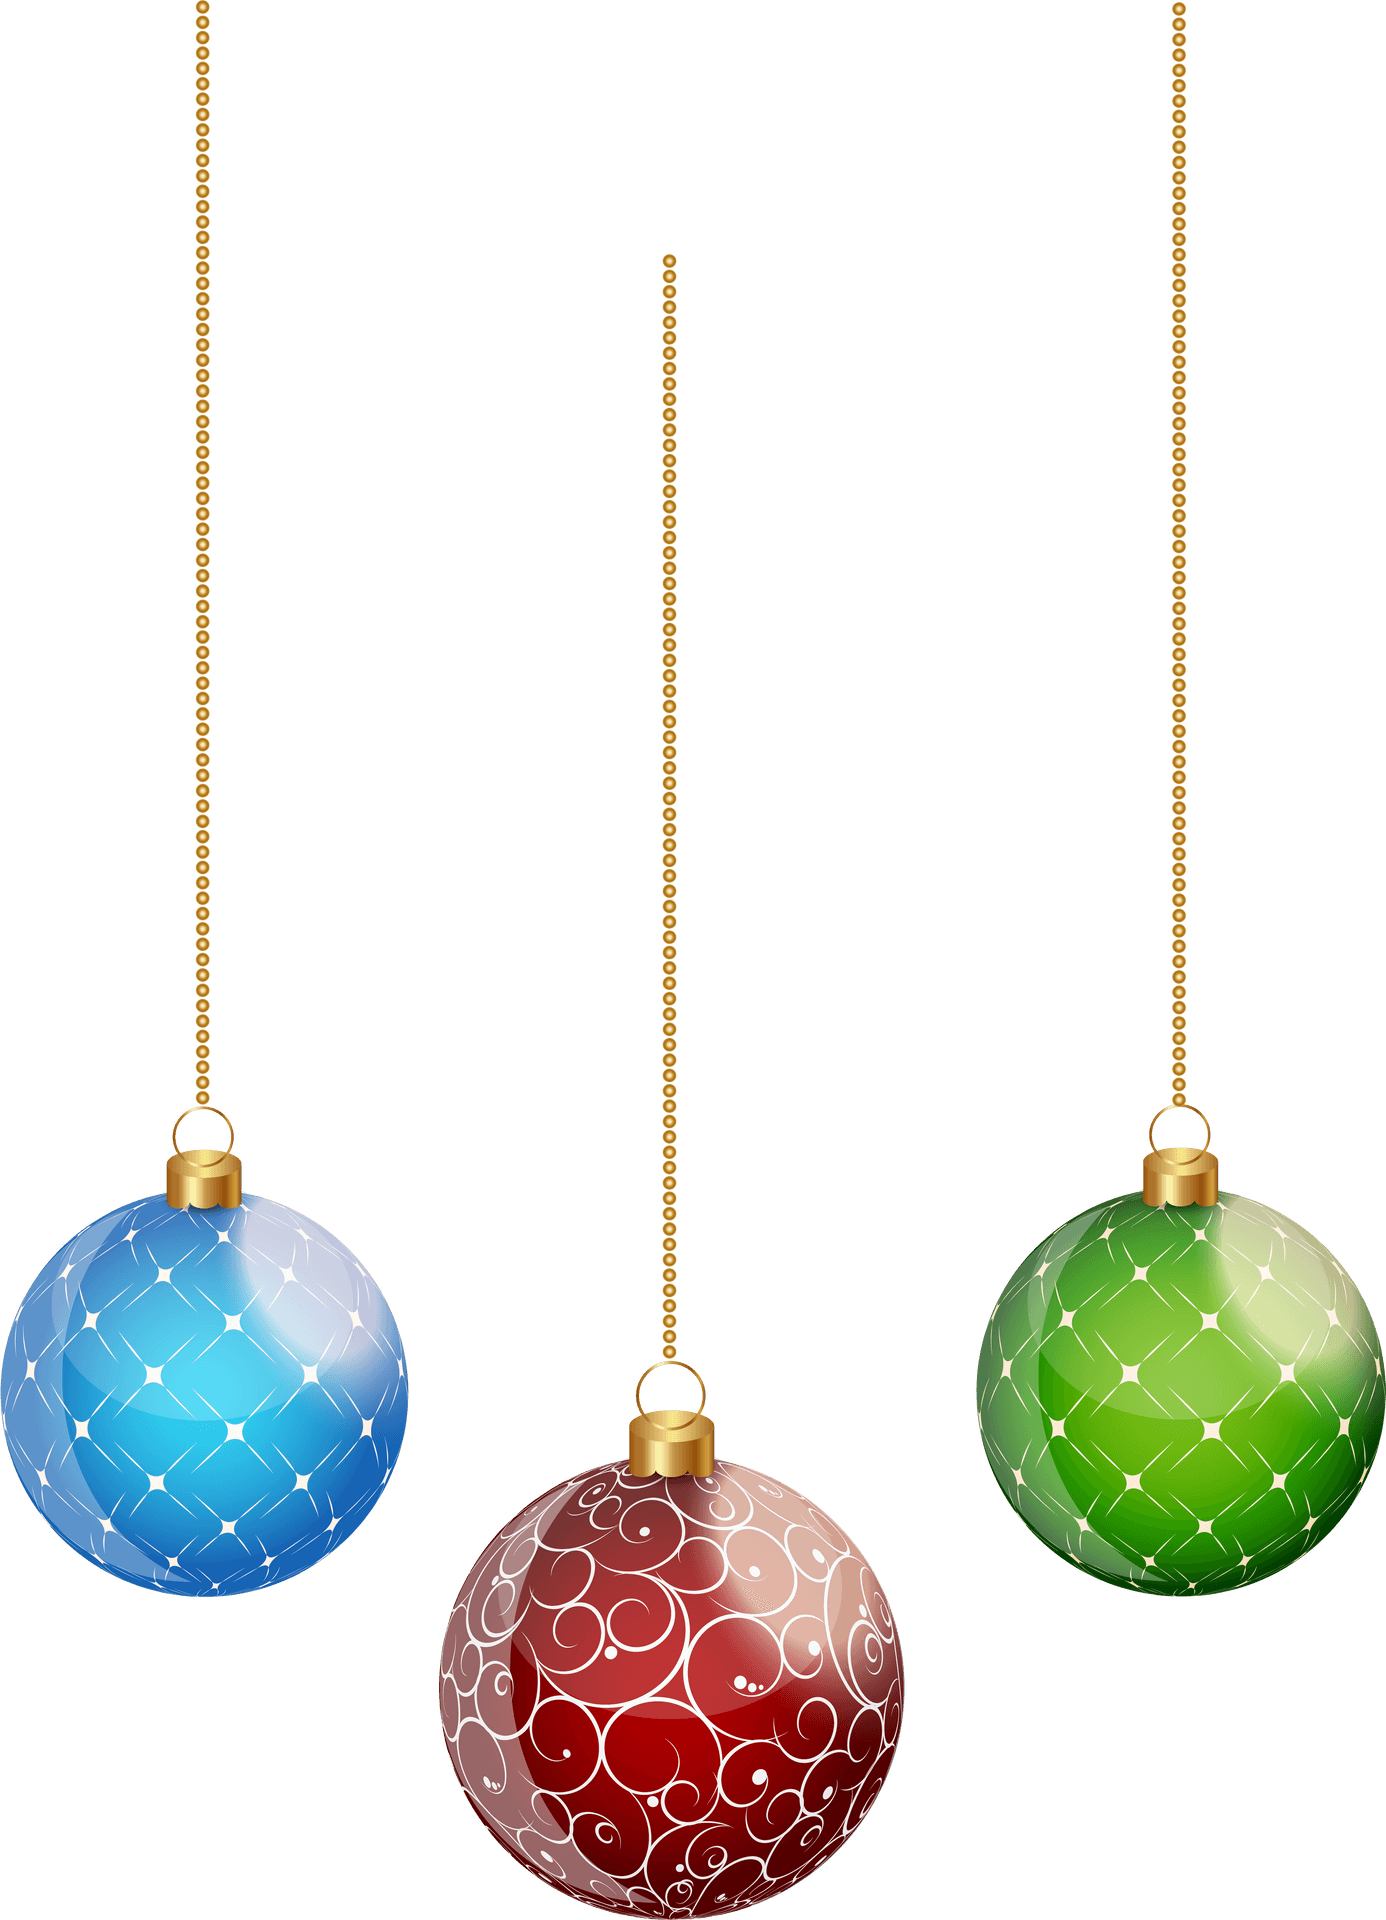 Colorful Christmas Balls Hanging PNG